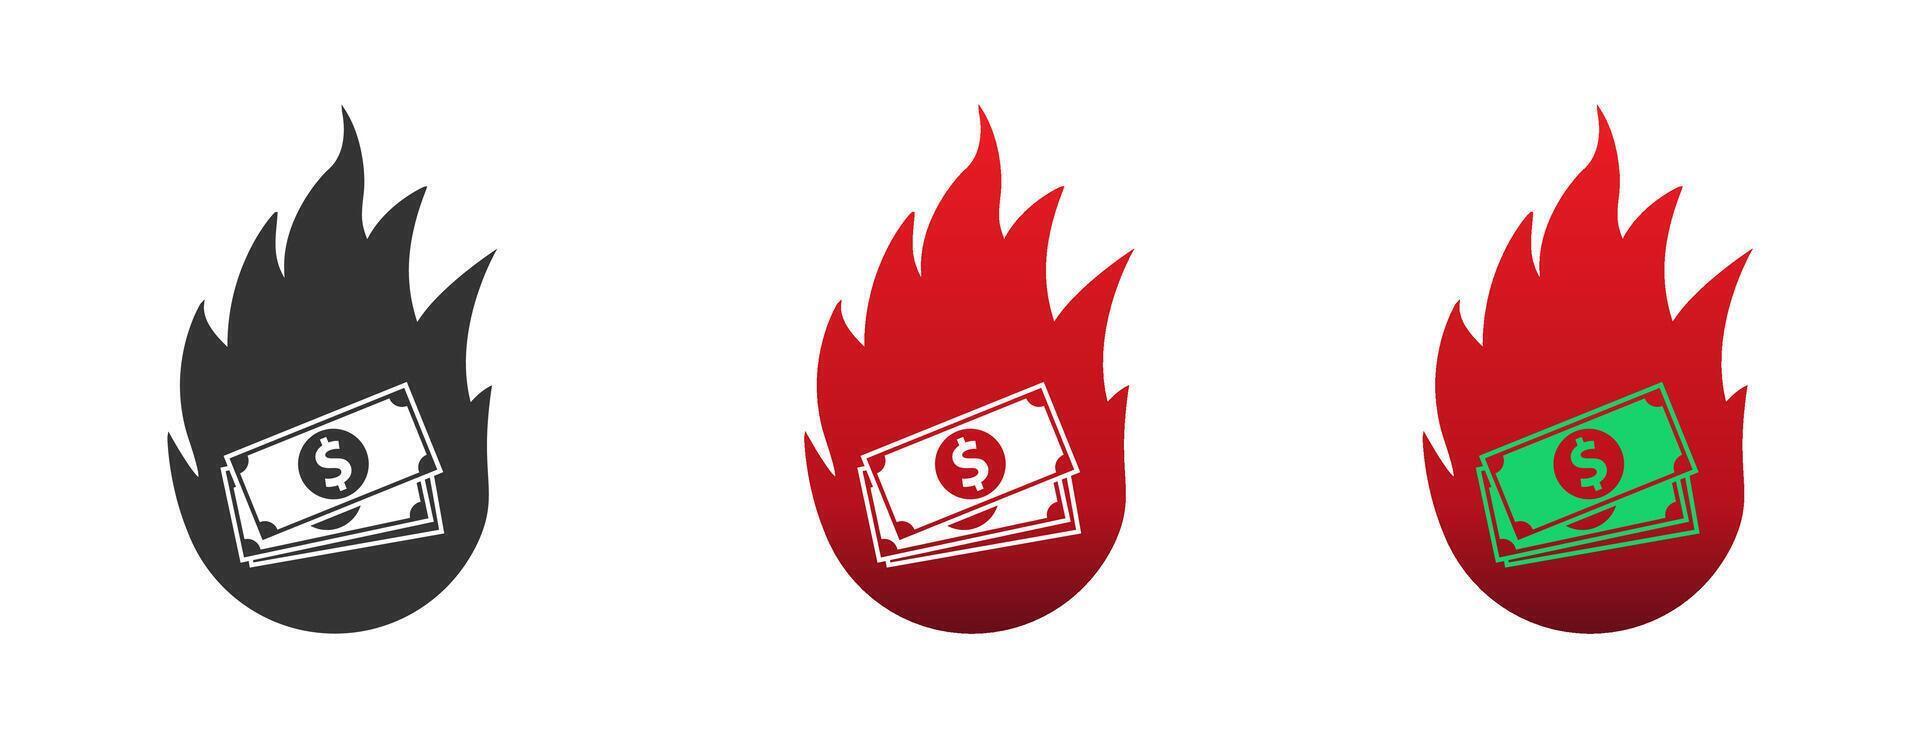 burning dollar icon. Money icon in fire. Vector illustration.